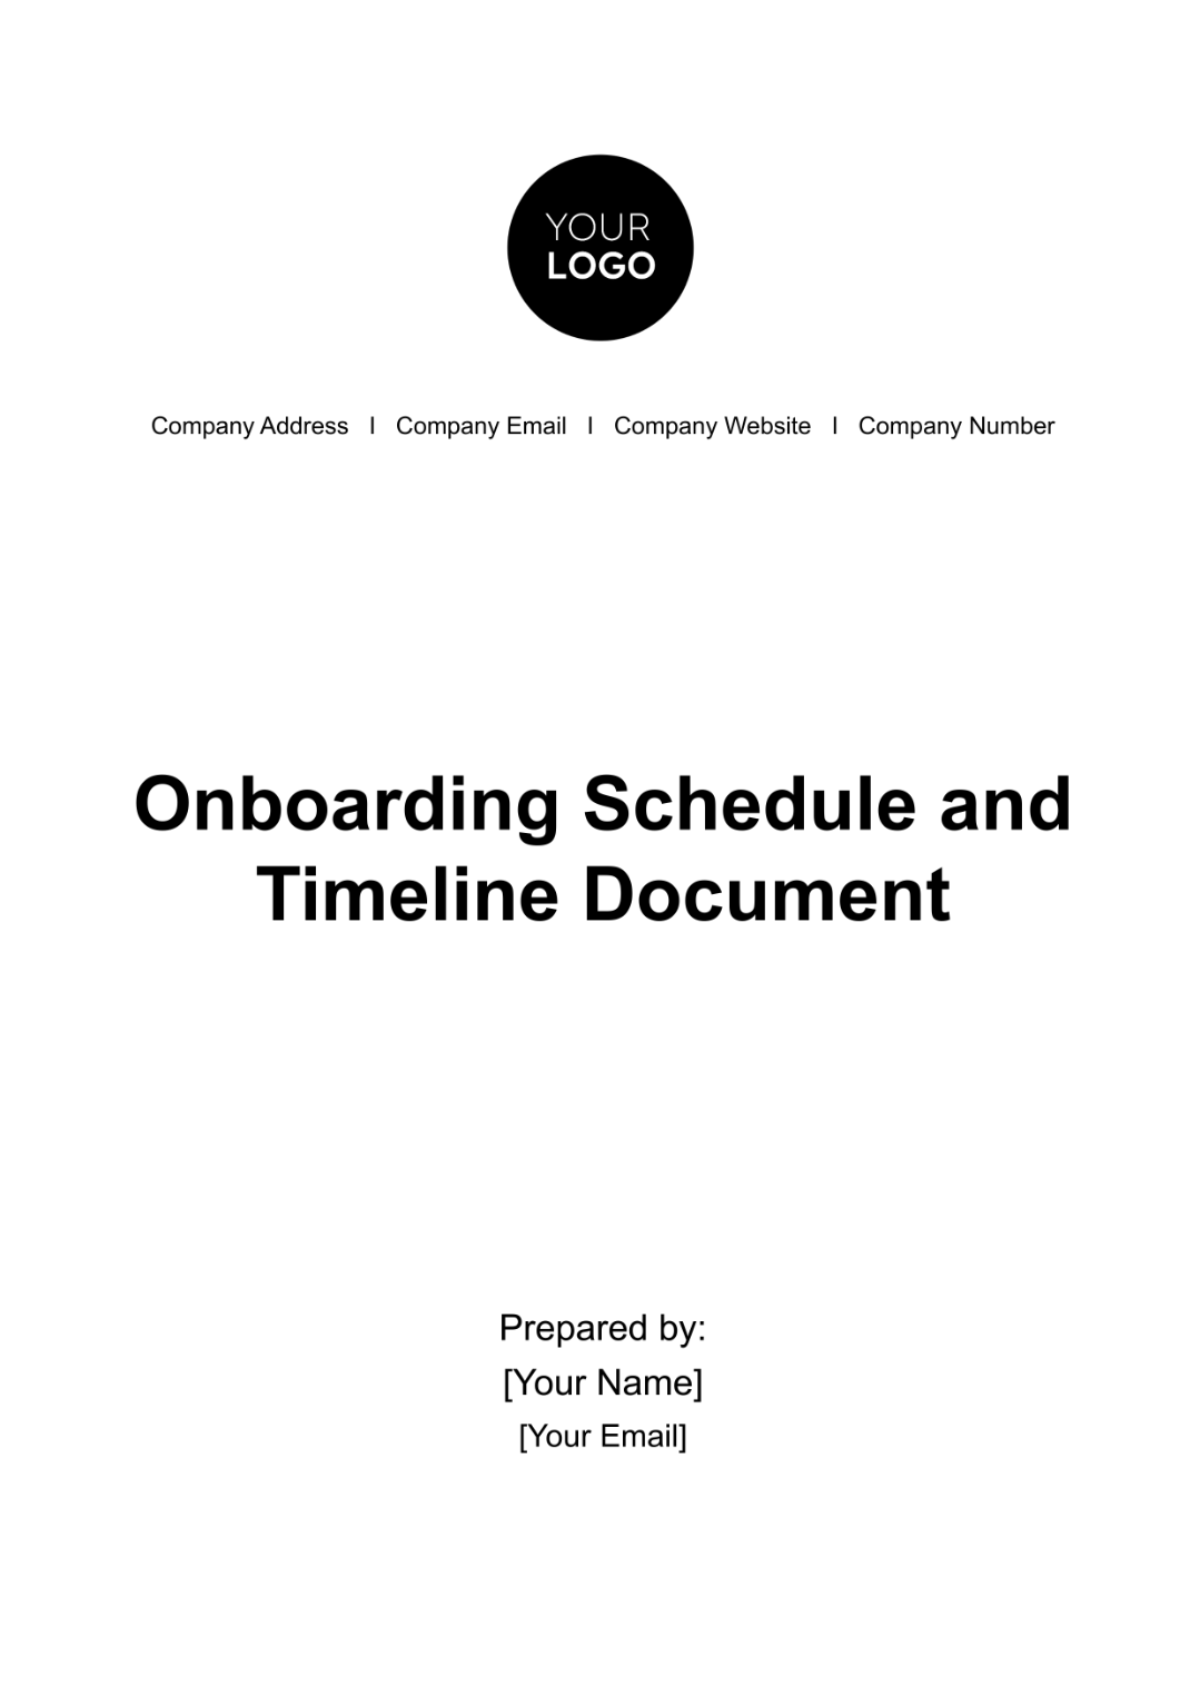 Onboarding Schedule & Timeline Document HR Template